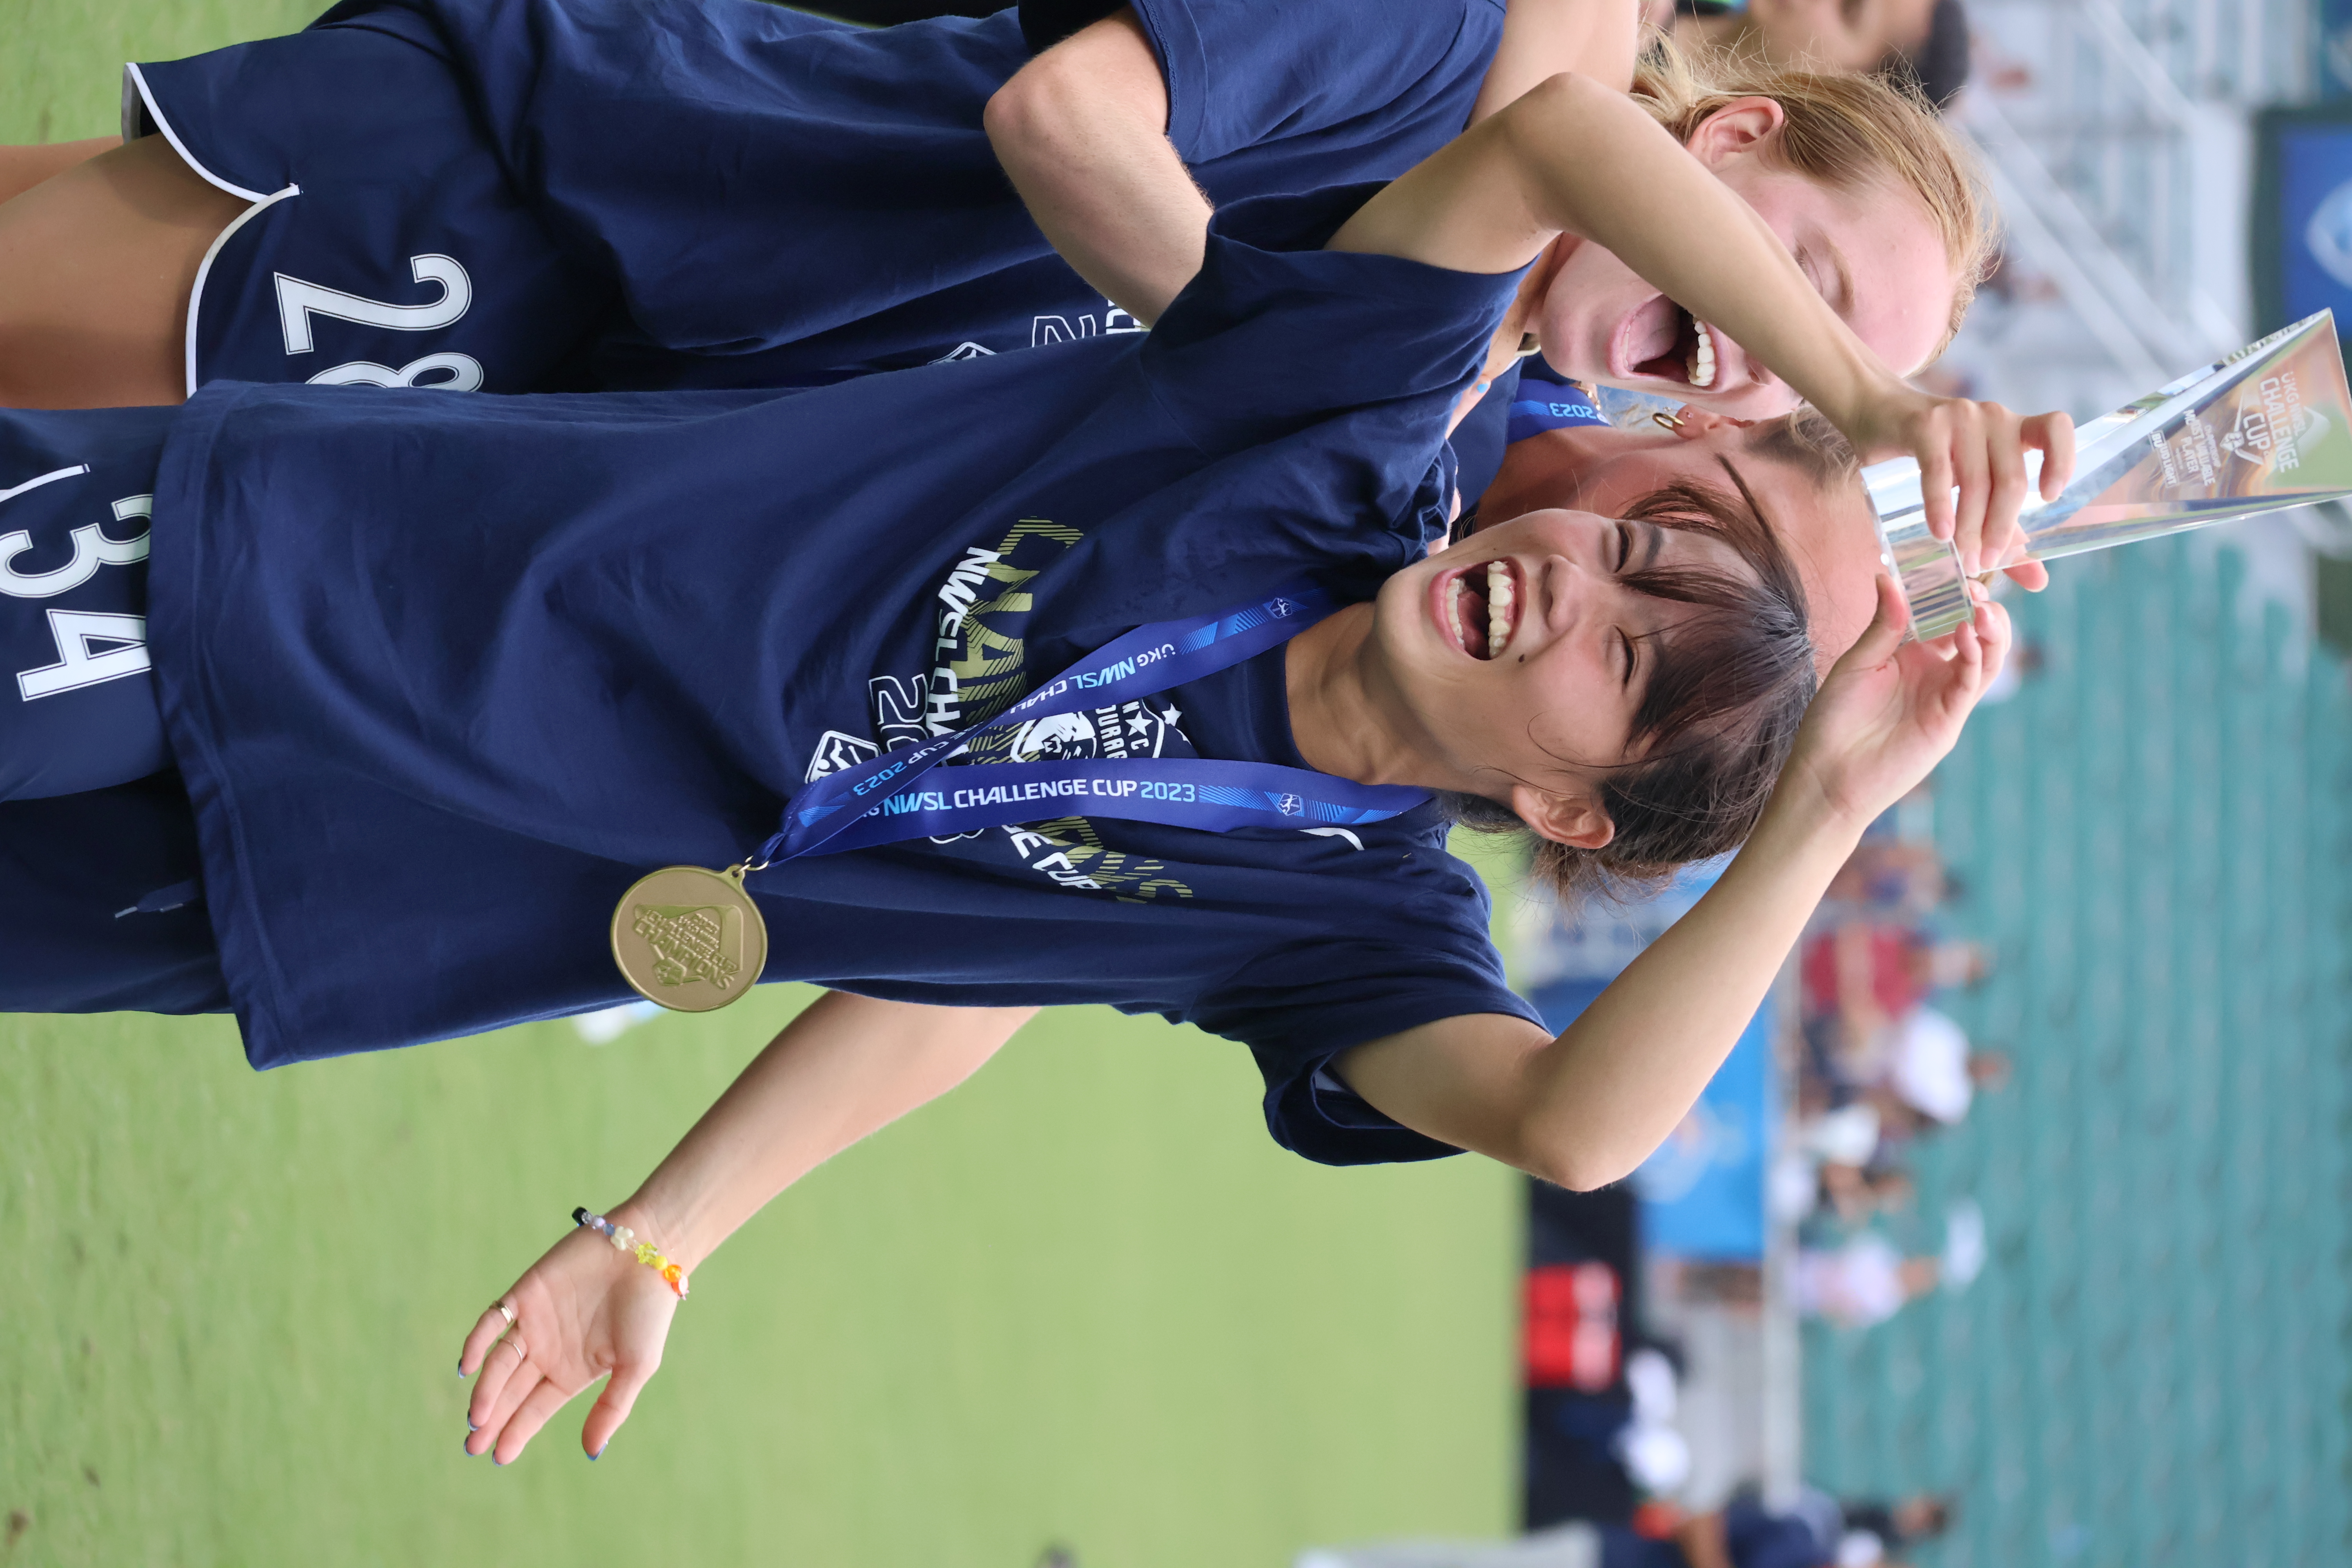 National Women's Soccer League - Wikipedia